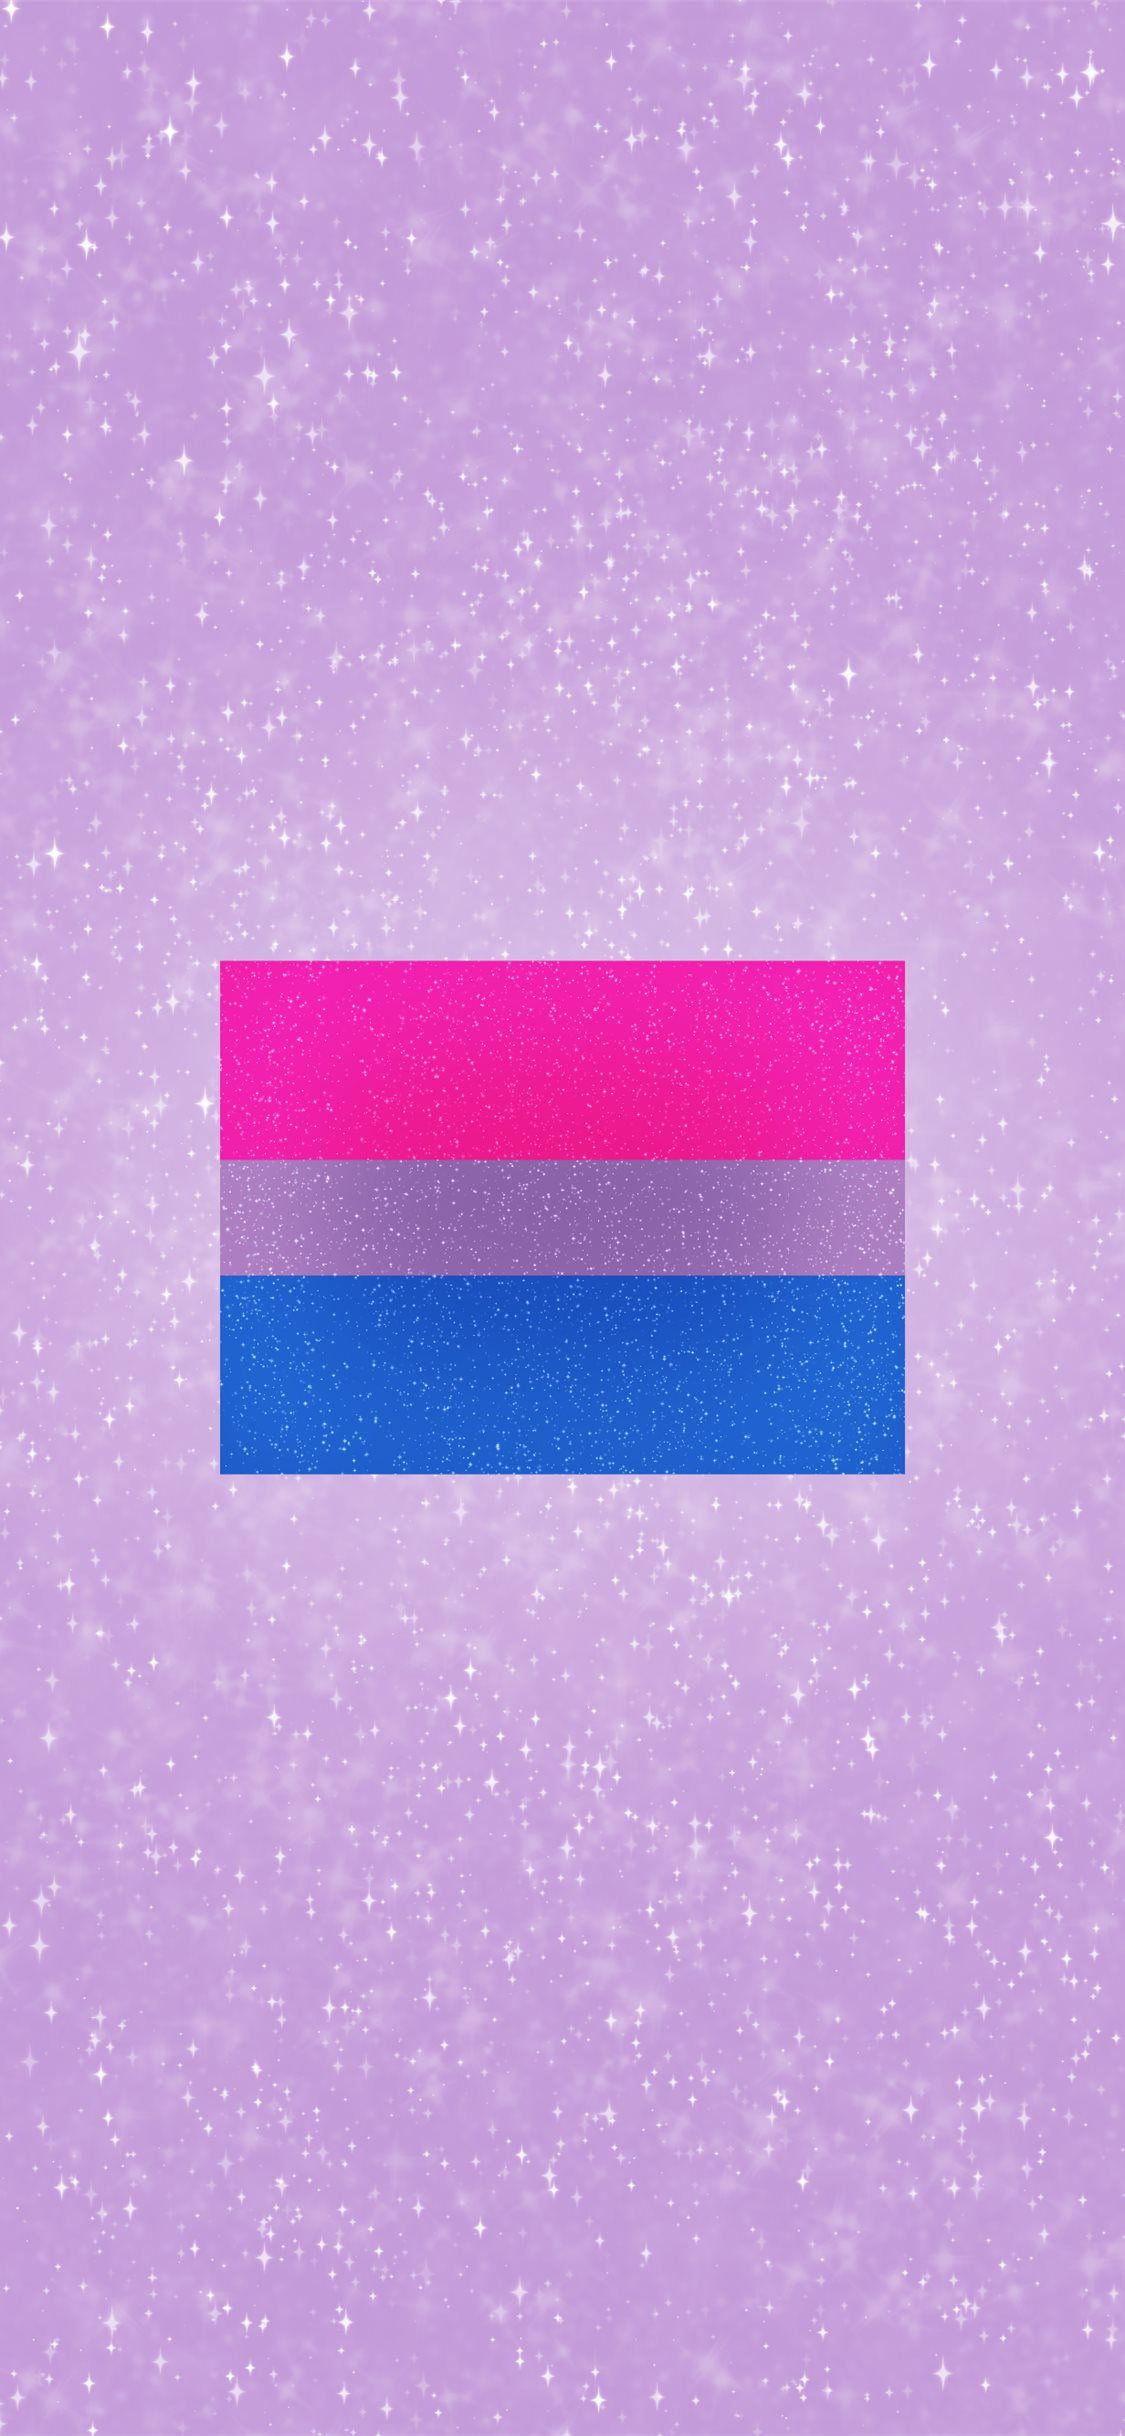 bisexual flag iPhone Wallpaper Free Download